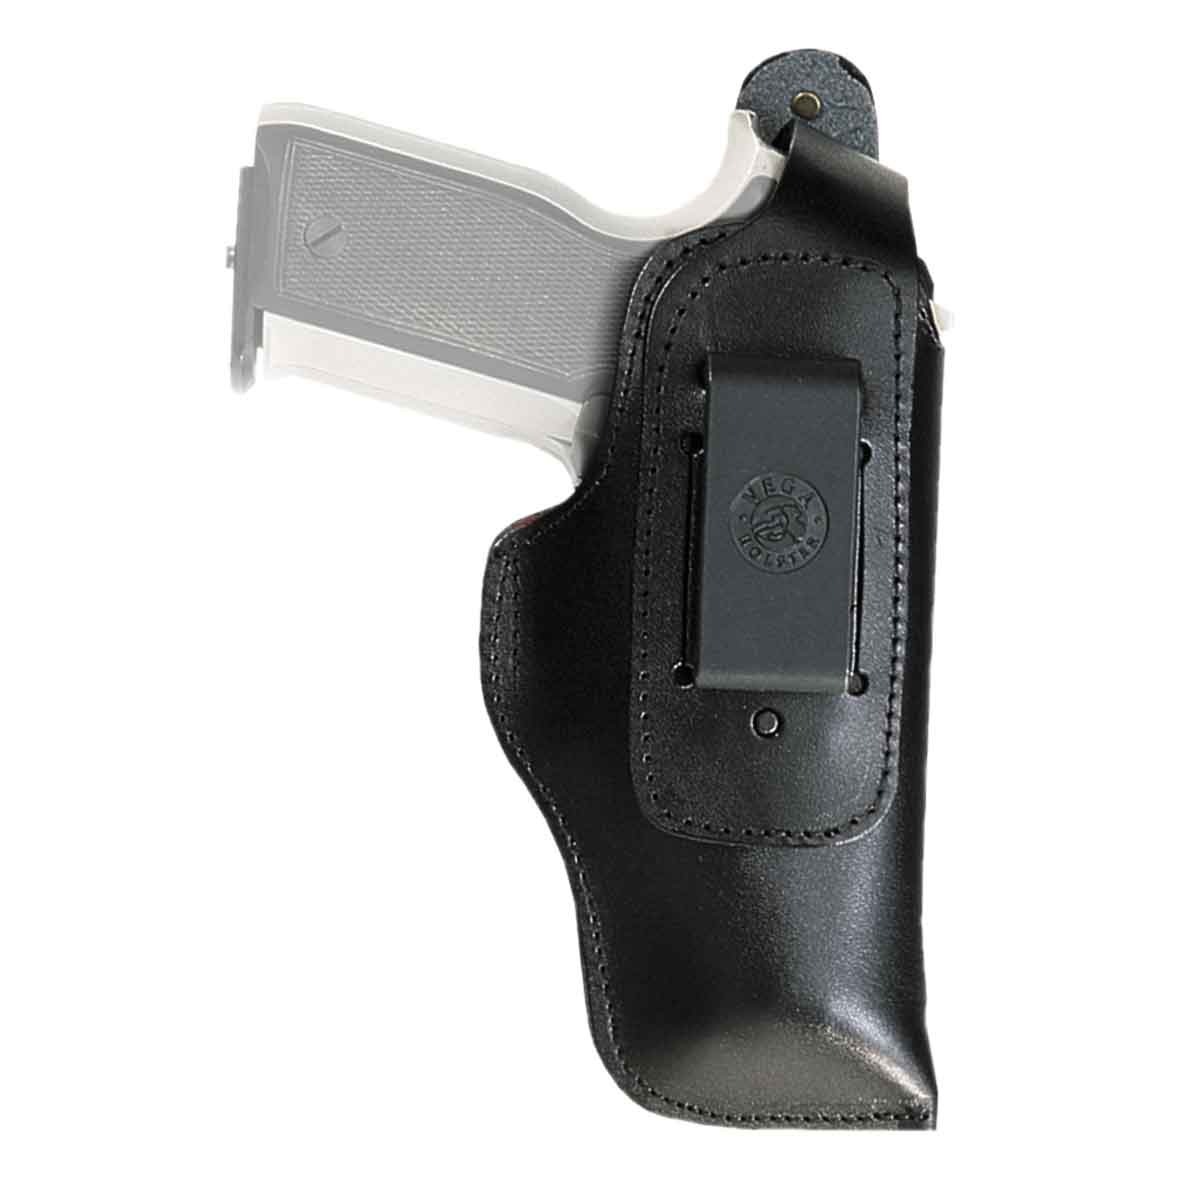 IWB / OWB belt holster